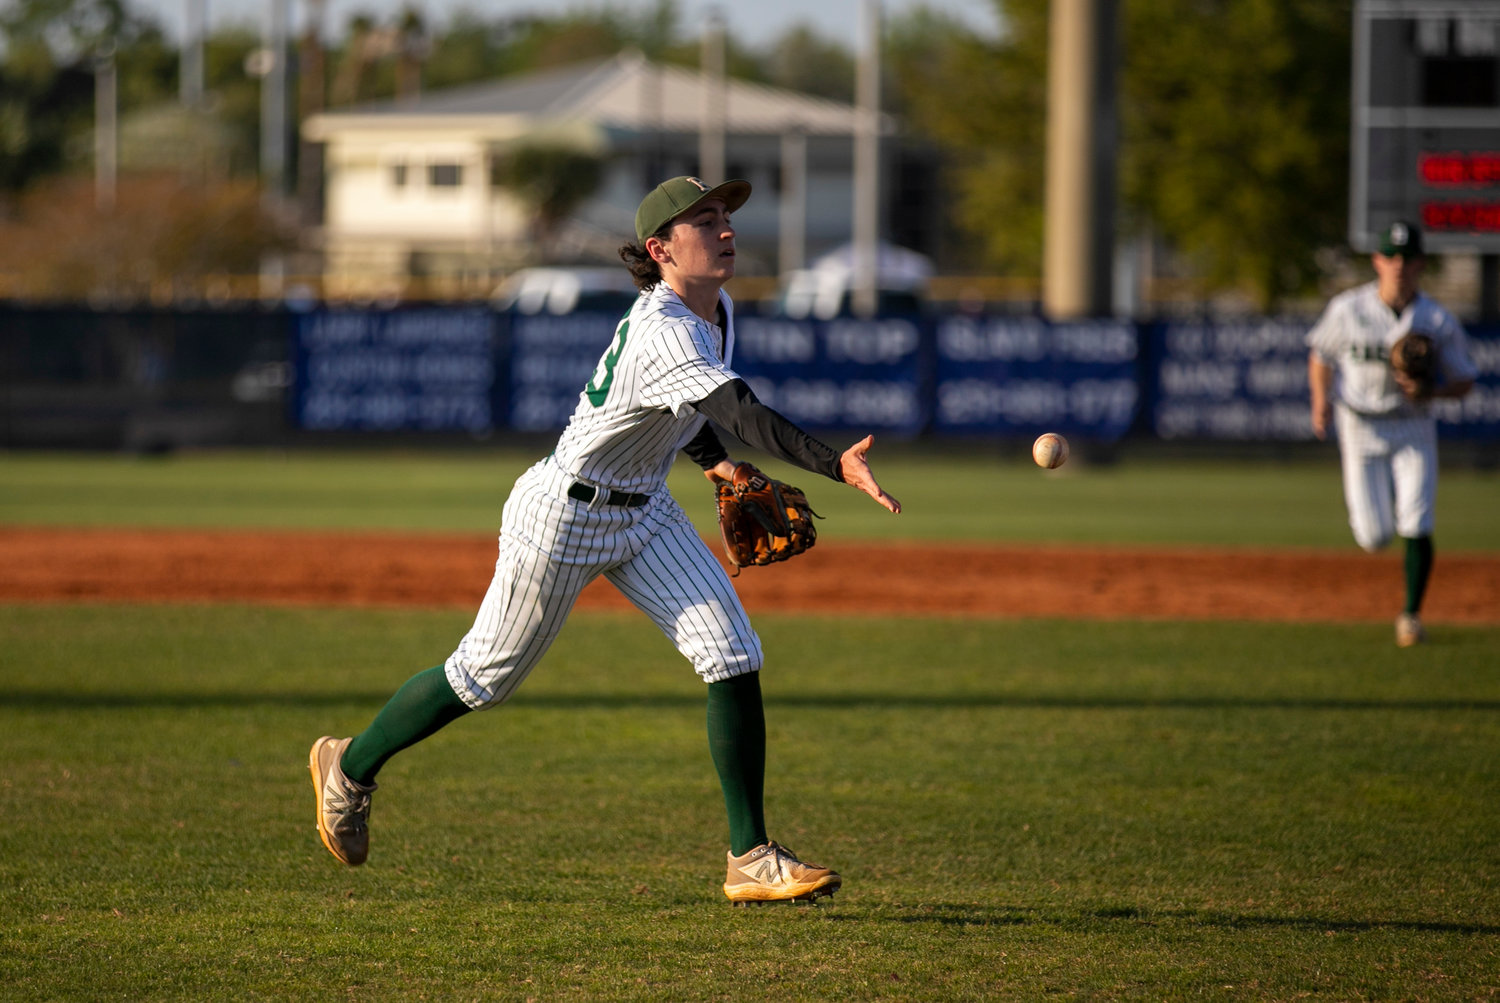 PHOTO GALLERY Gulf Coast Classic baseball, softball tournaments bring